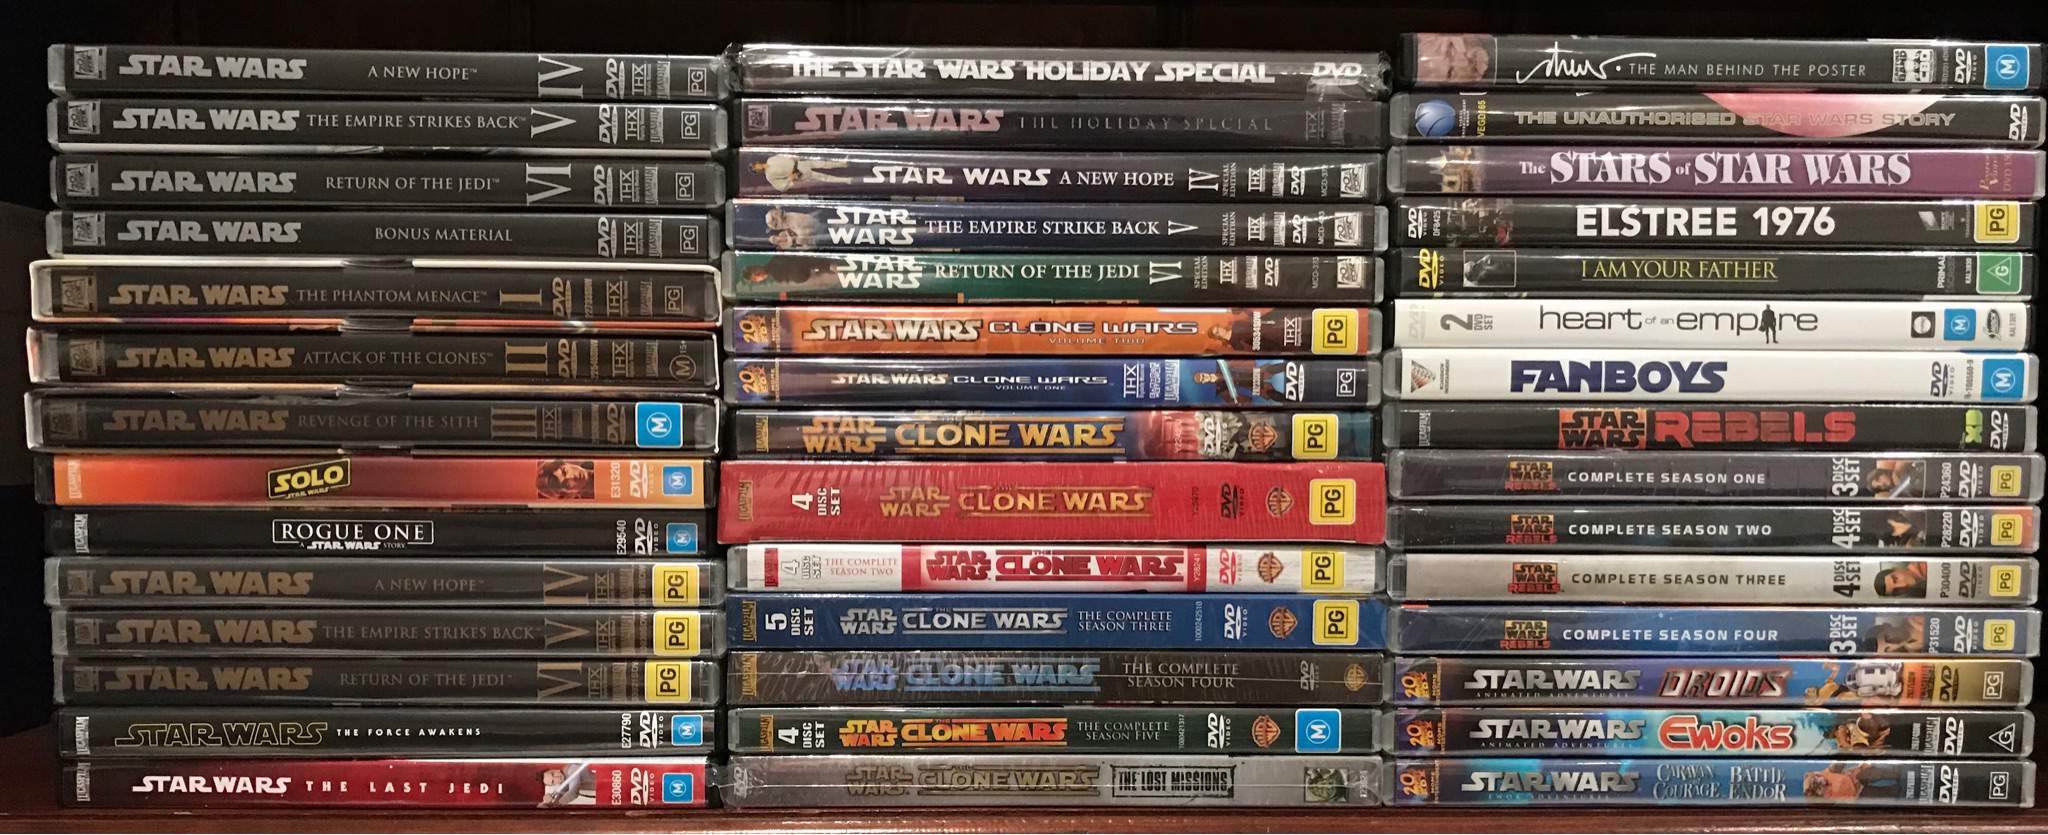 star wars the clone wars dvd set